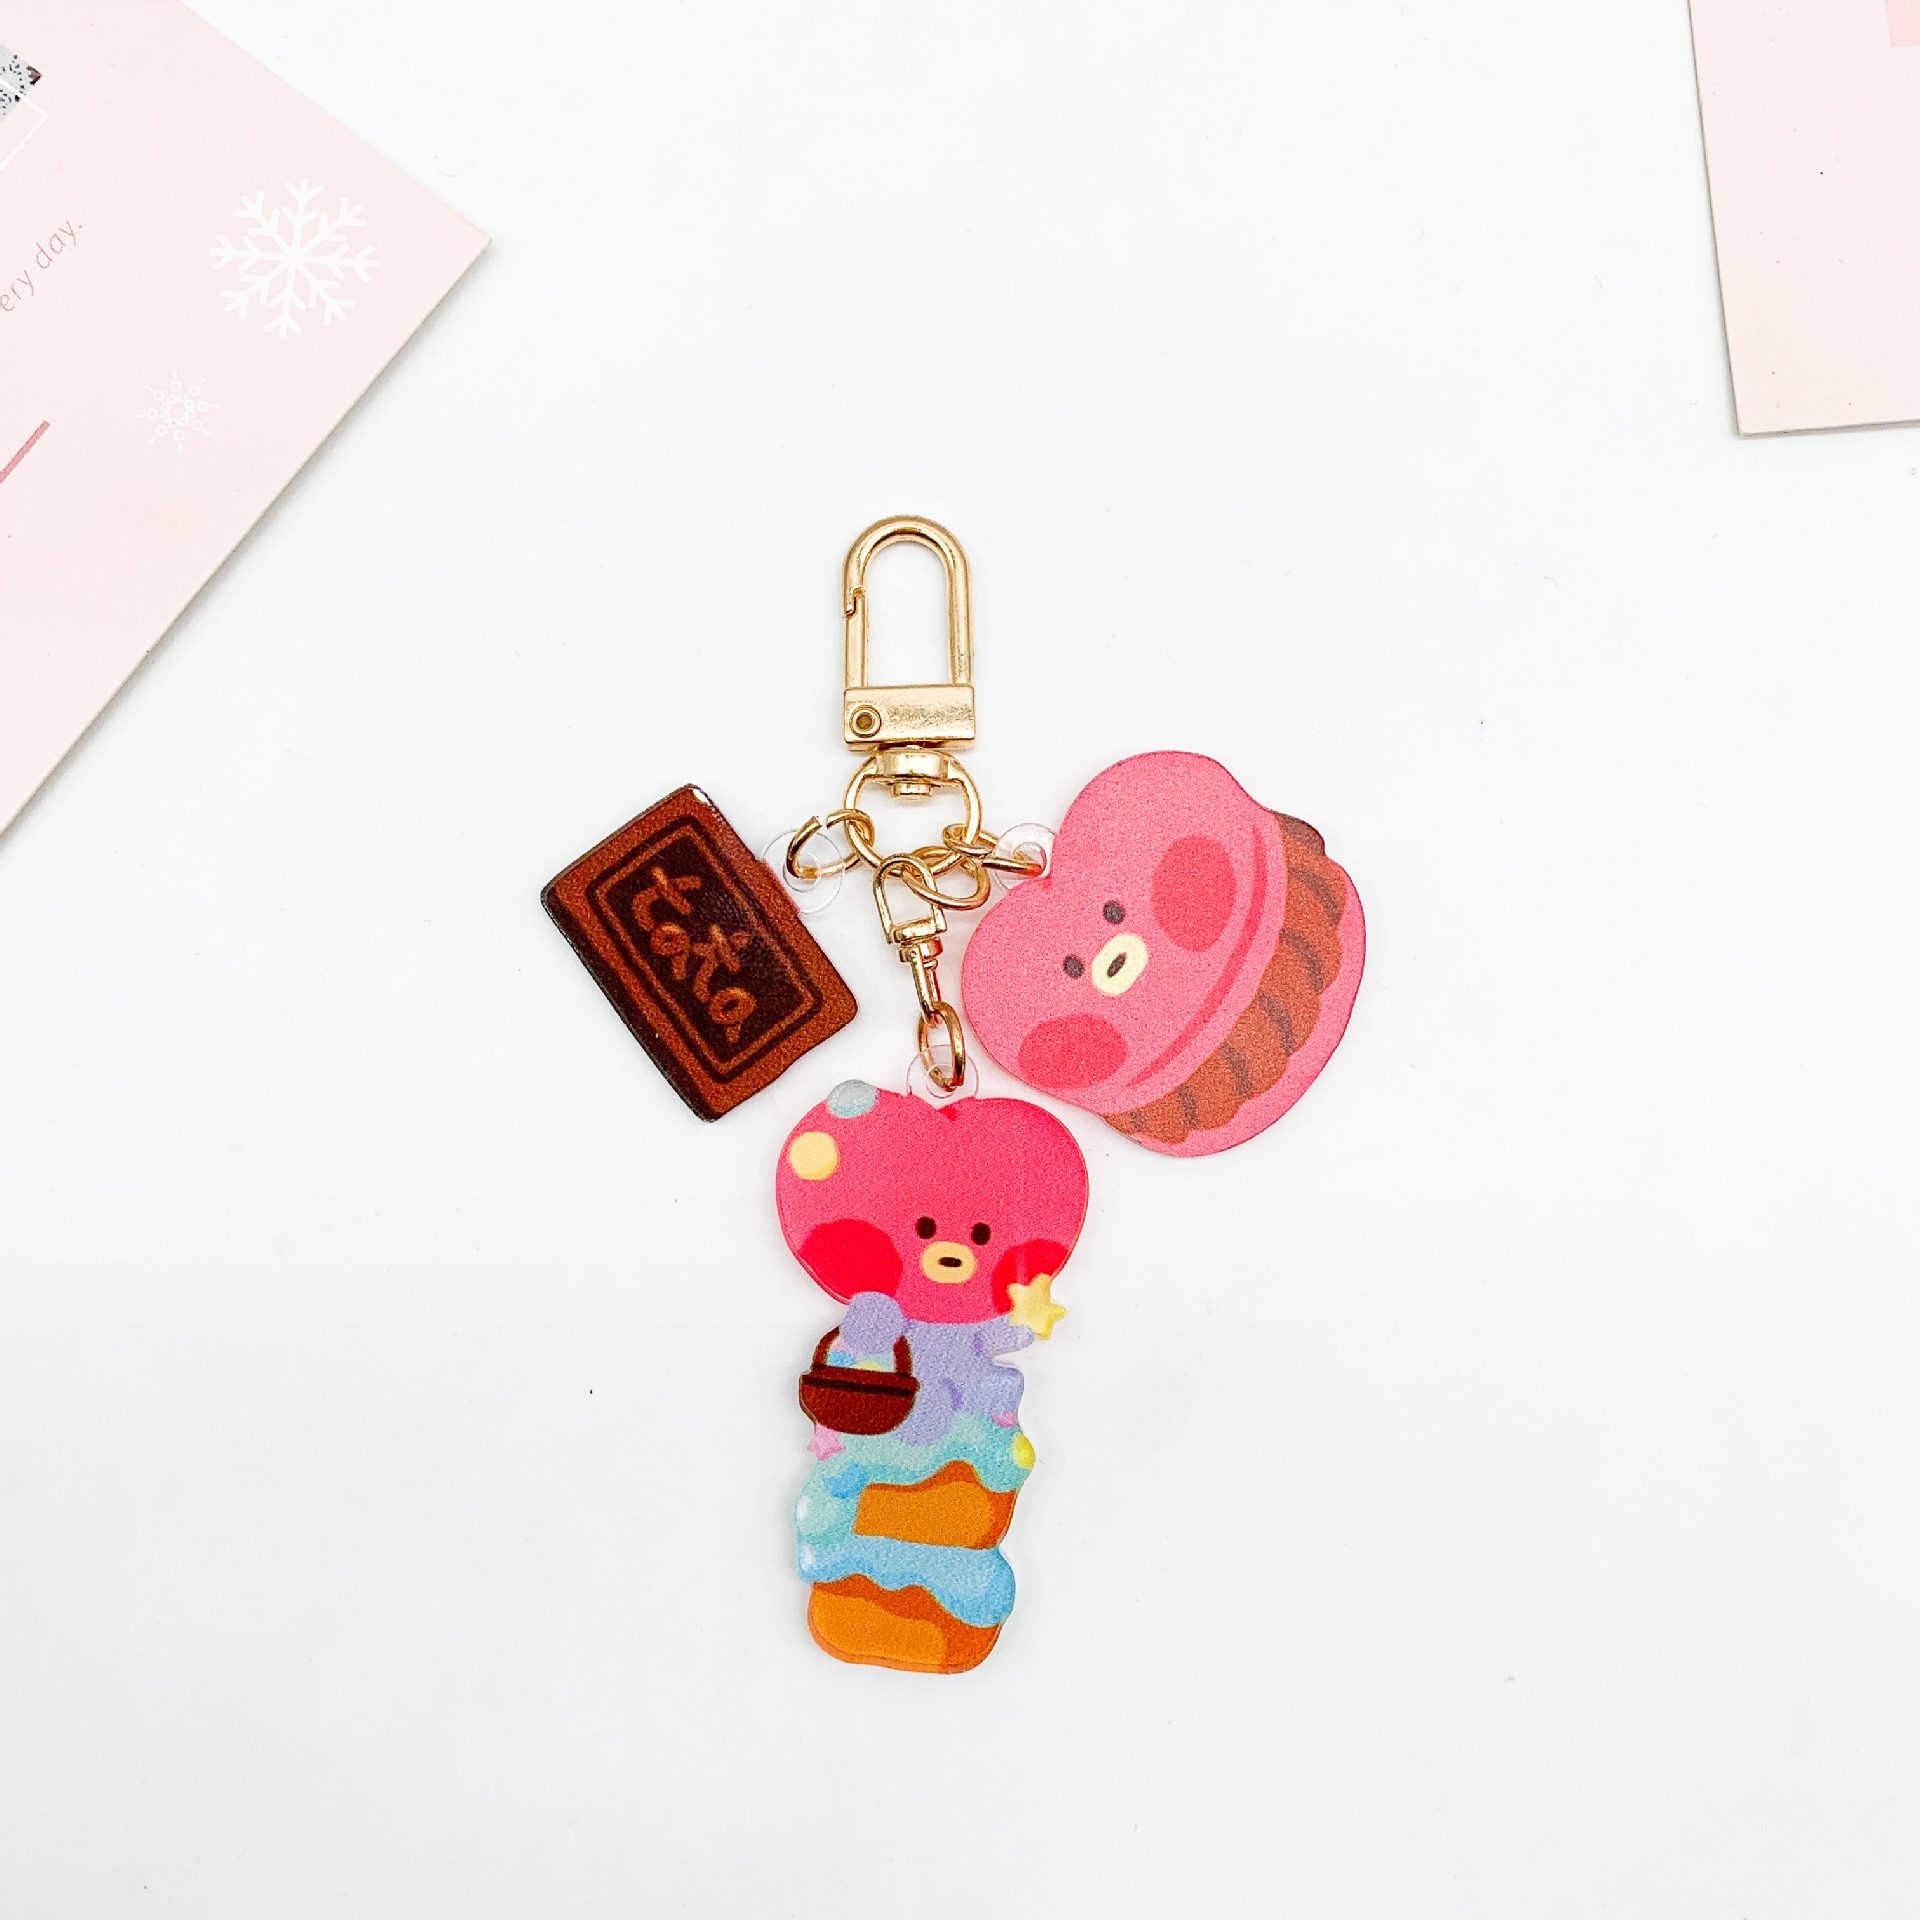 New Bt21 Kpop Acrylic Keychain Cartoon Rj Mang Chimmy Kola Love Plush Doll Toy Pendant Ornaments 2 - BT21 Plush